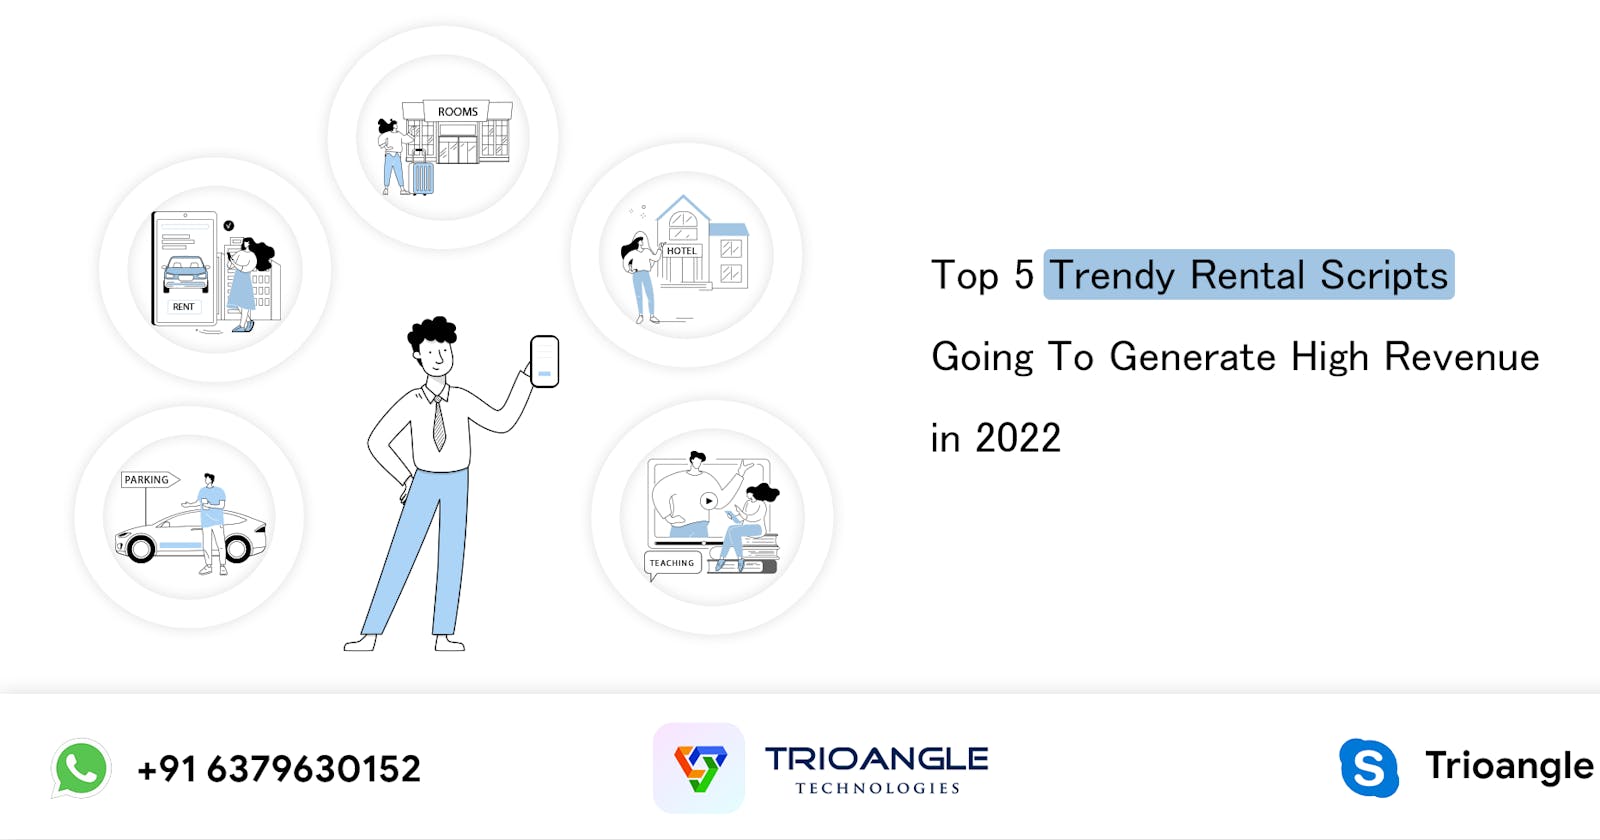 Top 5 Trendy Rental Scripts Going To Generate High Revenue in 2022